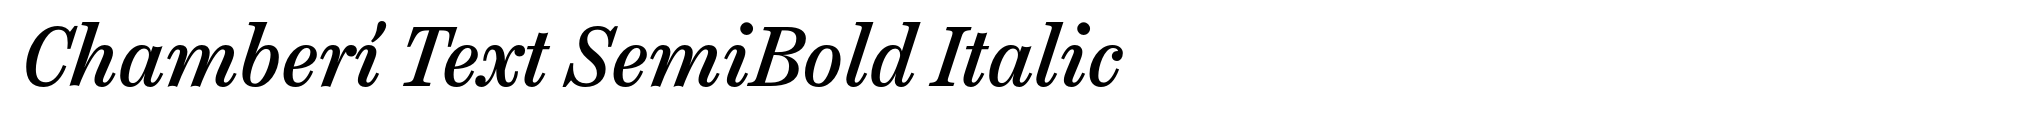 Chamberí Text SemiBold Italic image